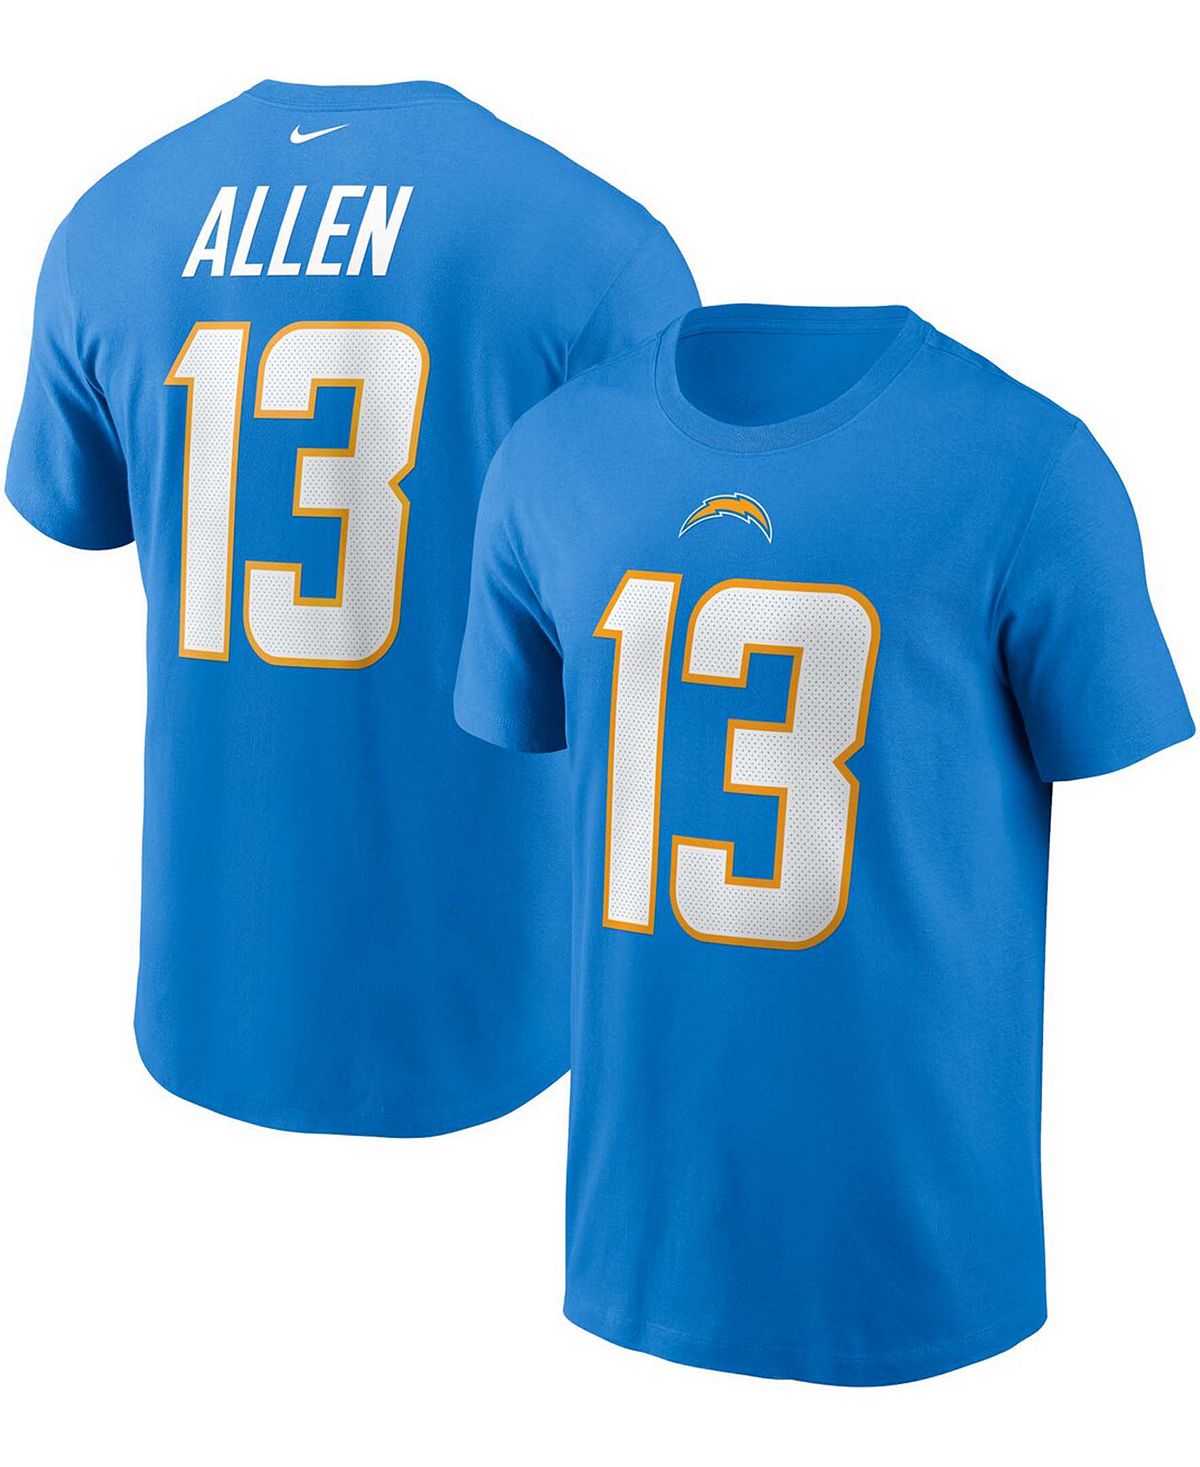 Мужская футболка Keenan Allen Powder Blue Los Angeles Chargers с именем и номером Nike